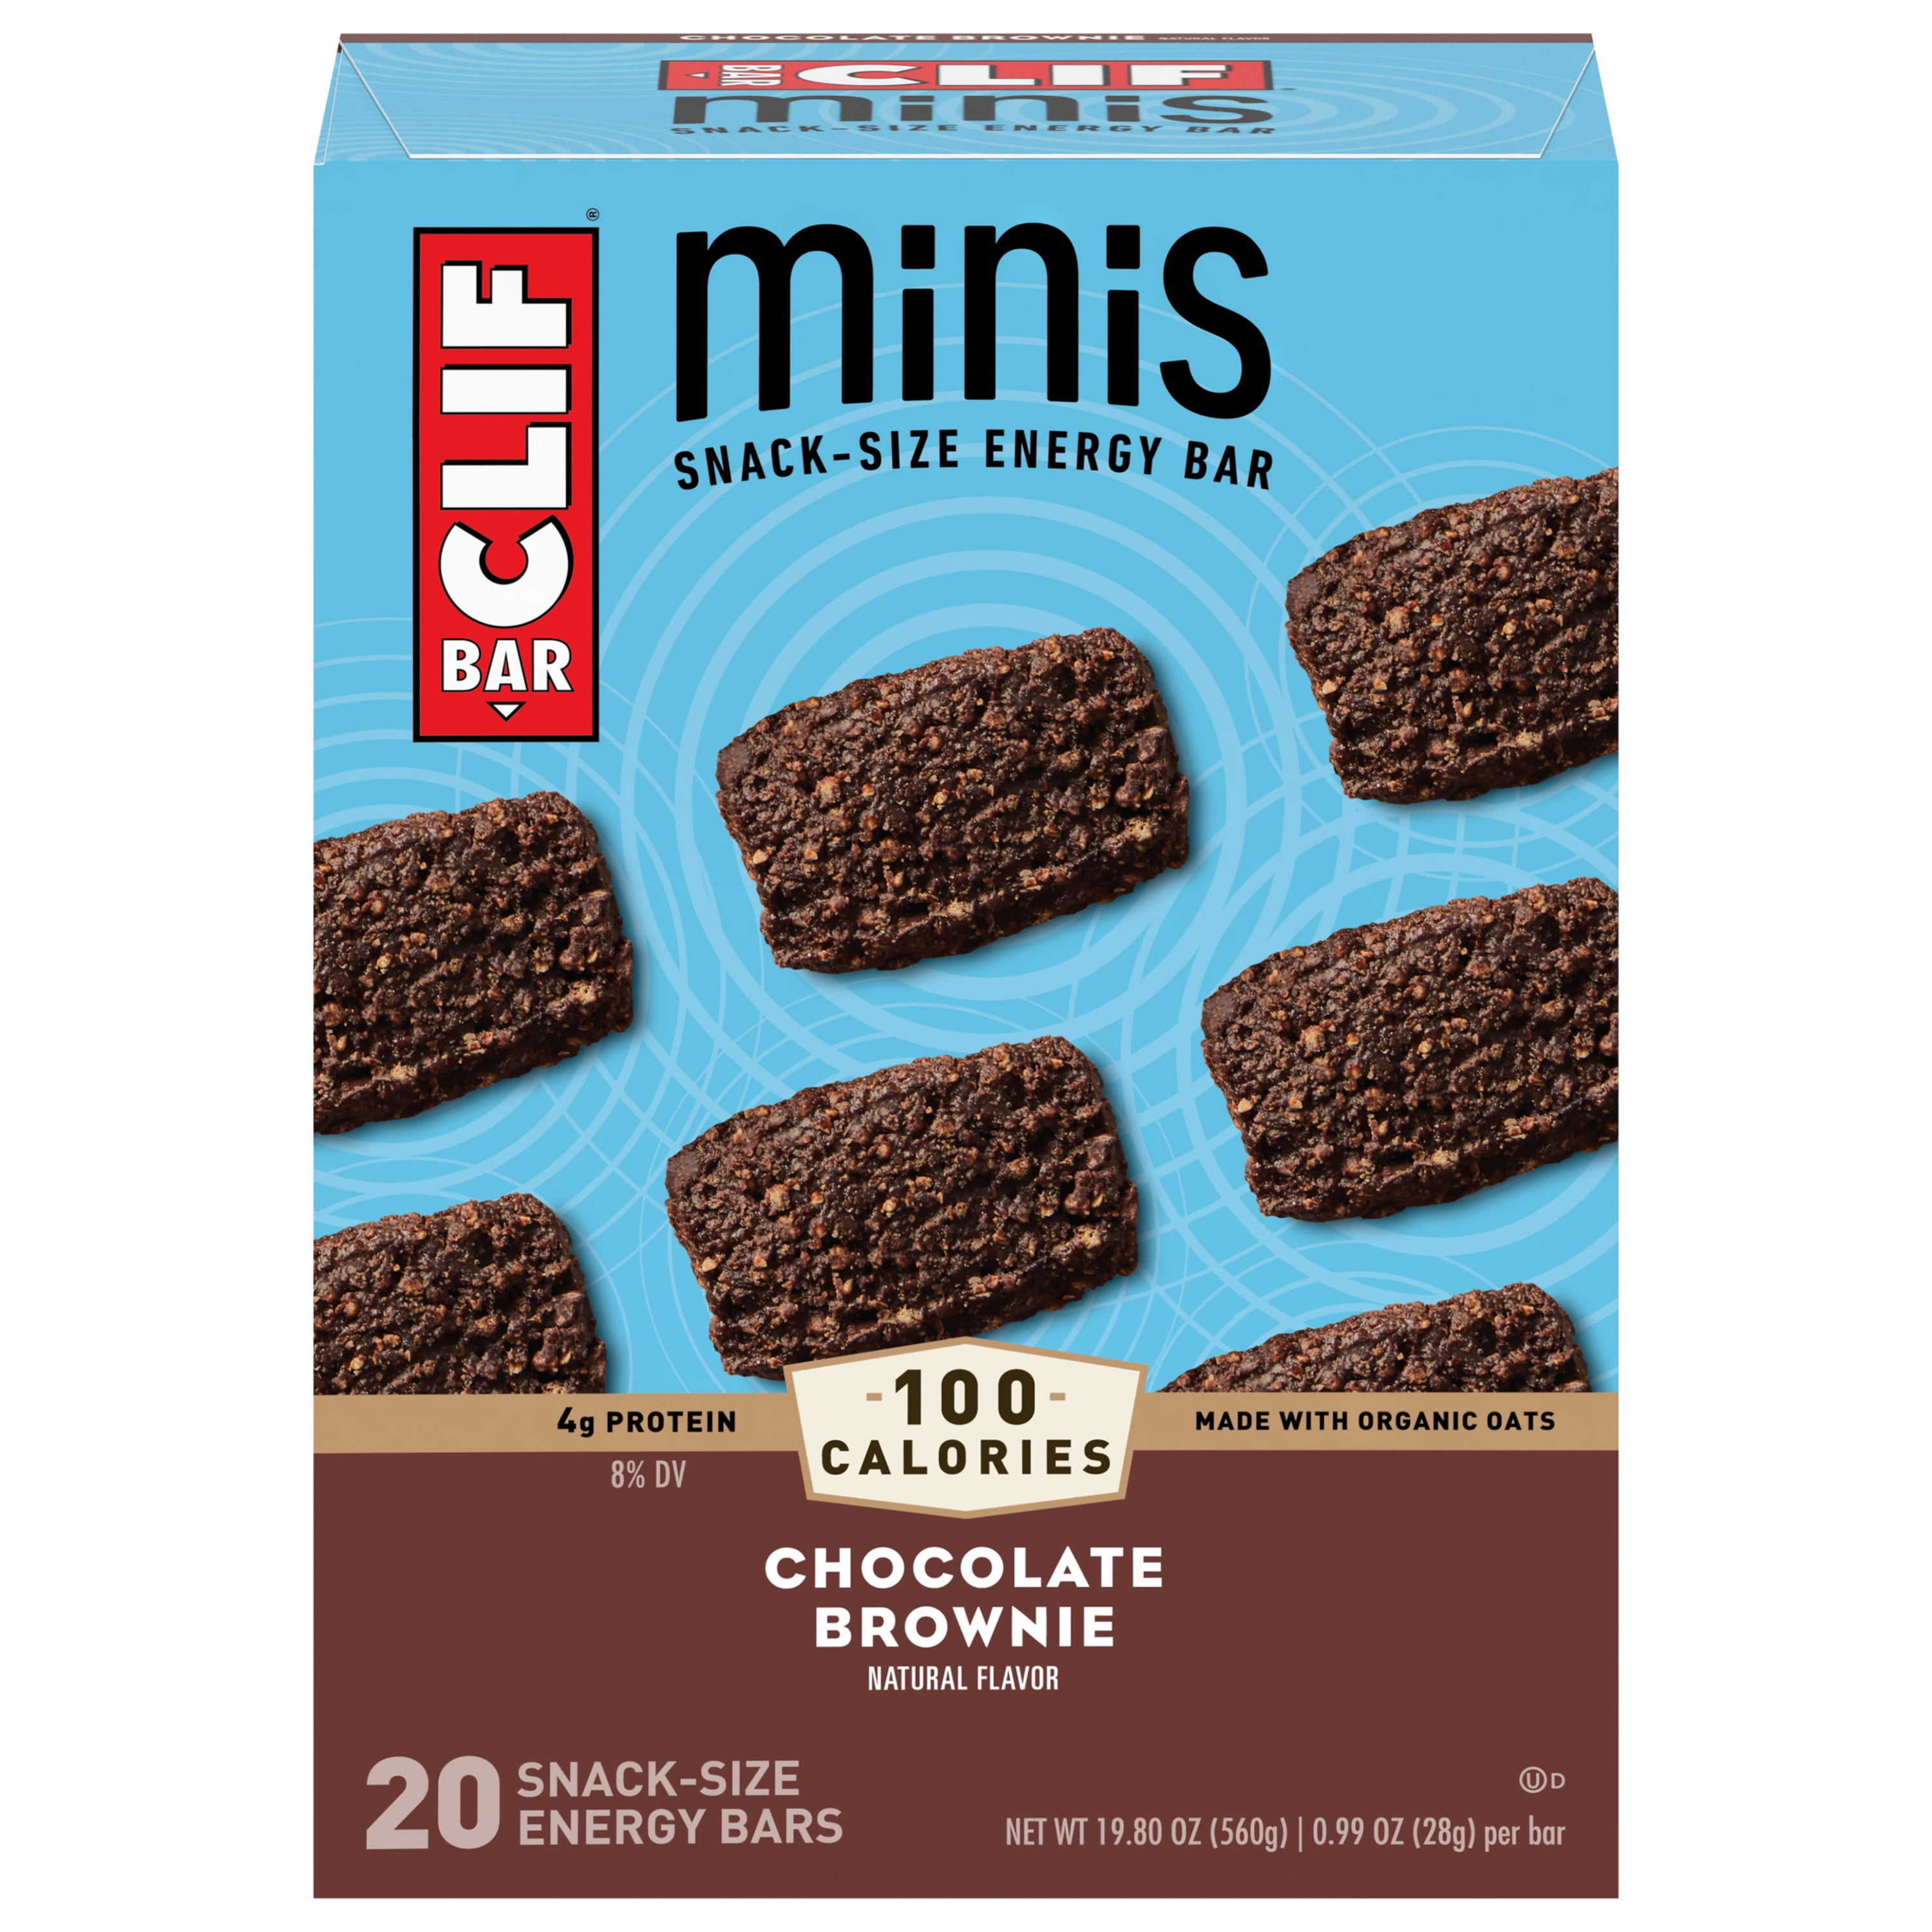 CLIF BAR Minis Energy Bars, Chocolate Brownie, 4g Protein Bar, 20 Ct, 0.99 oz